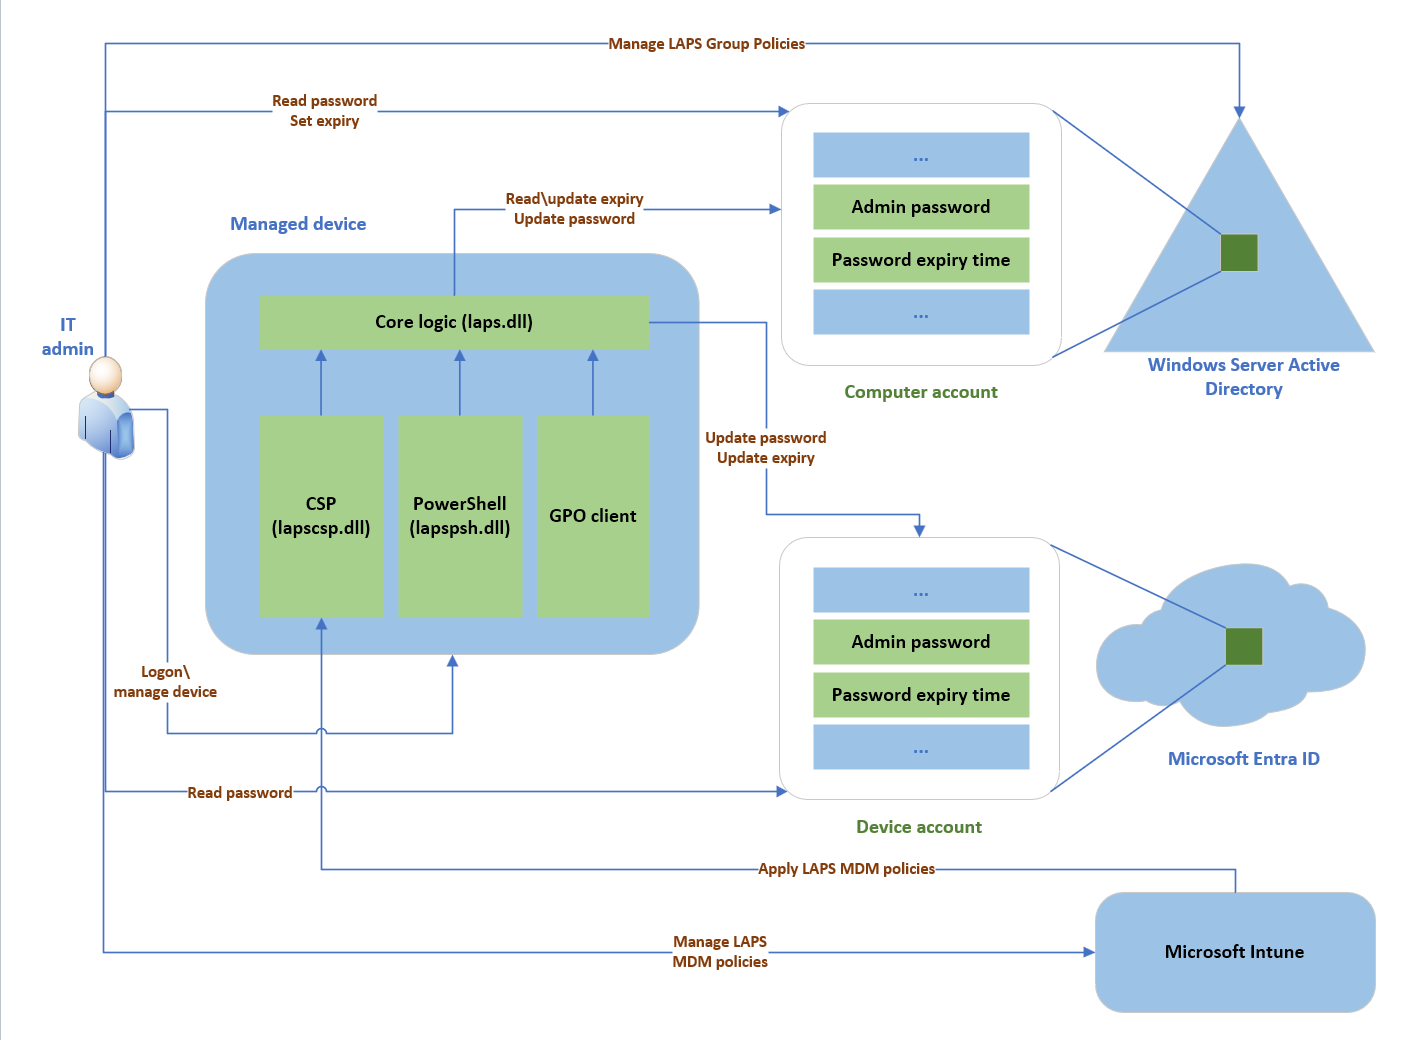 Diagrama da arquitetura LAPS do Windows que mostra o dispositivo gerenciado, a ID do Microsoft Entra e o Active Directory do Windows Server.